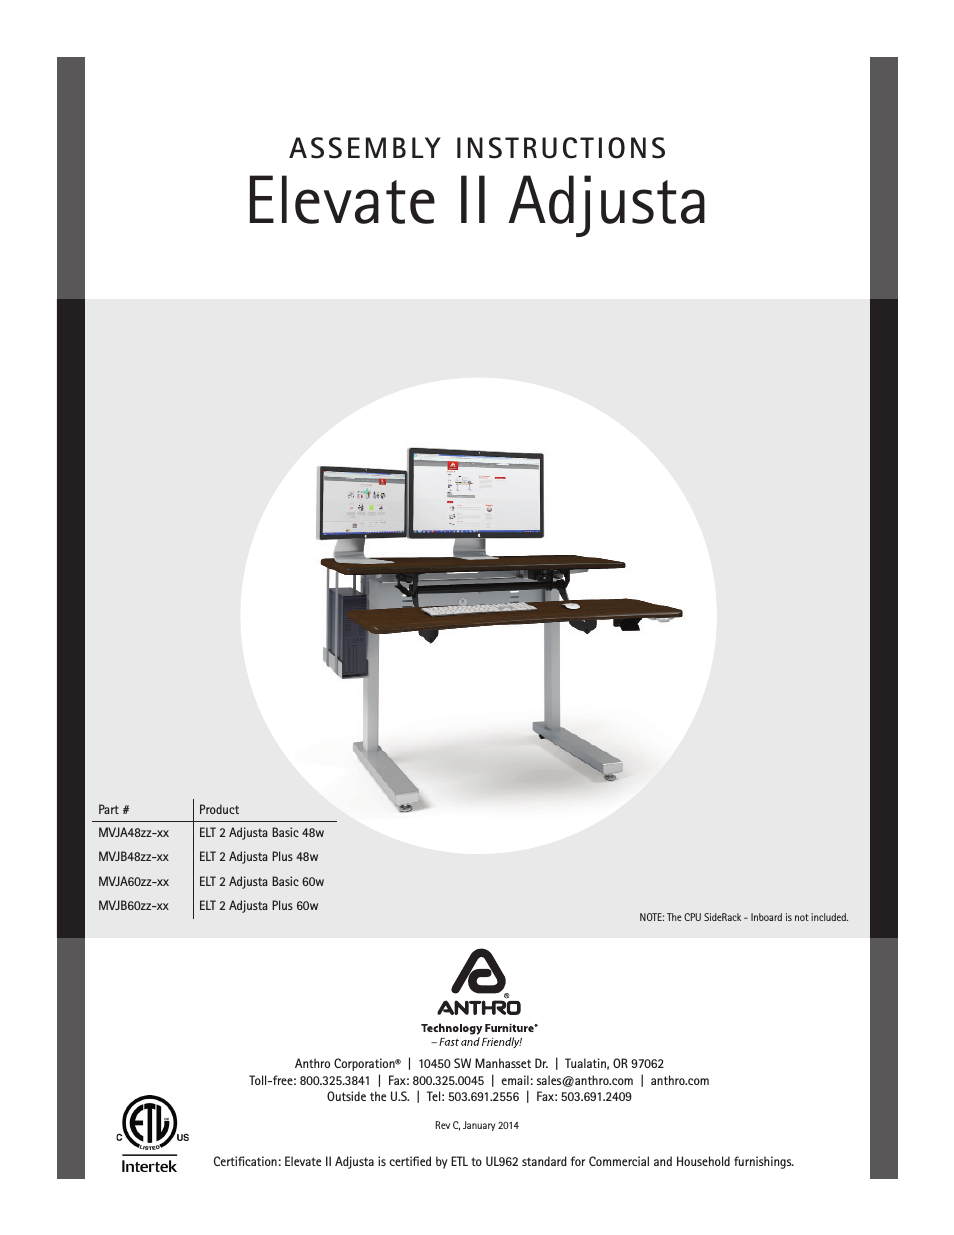 Elevate II Adjusta Assembly Instructions